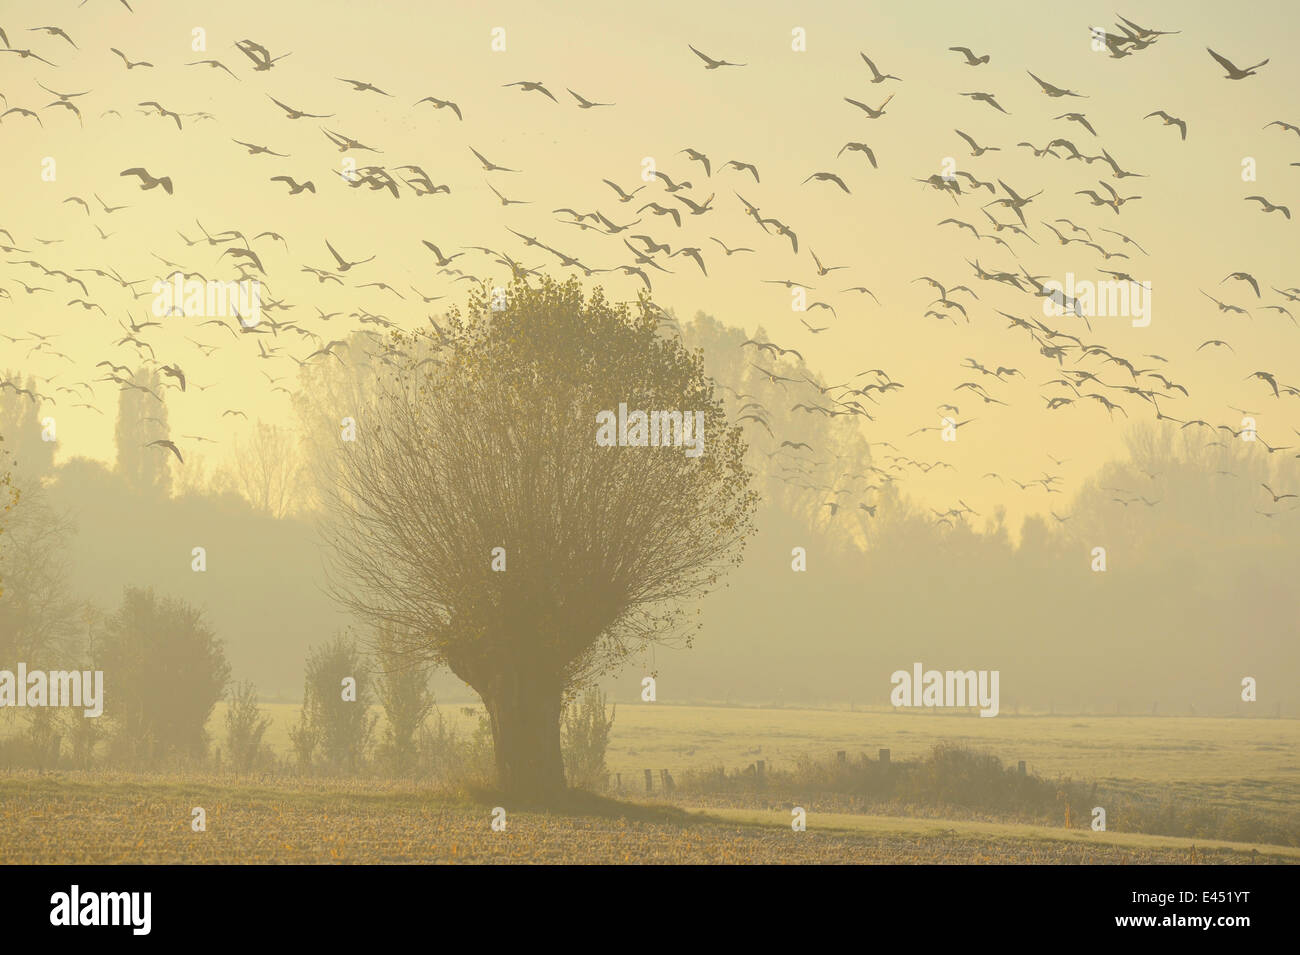 Flying geese swarm over trees in misty morning light, Xanten, Lower Rhine region, North Rhine-Westphalia, Germany Stock Photo